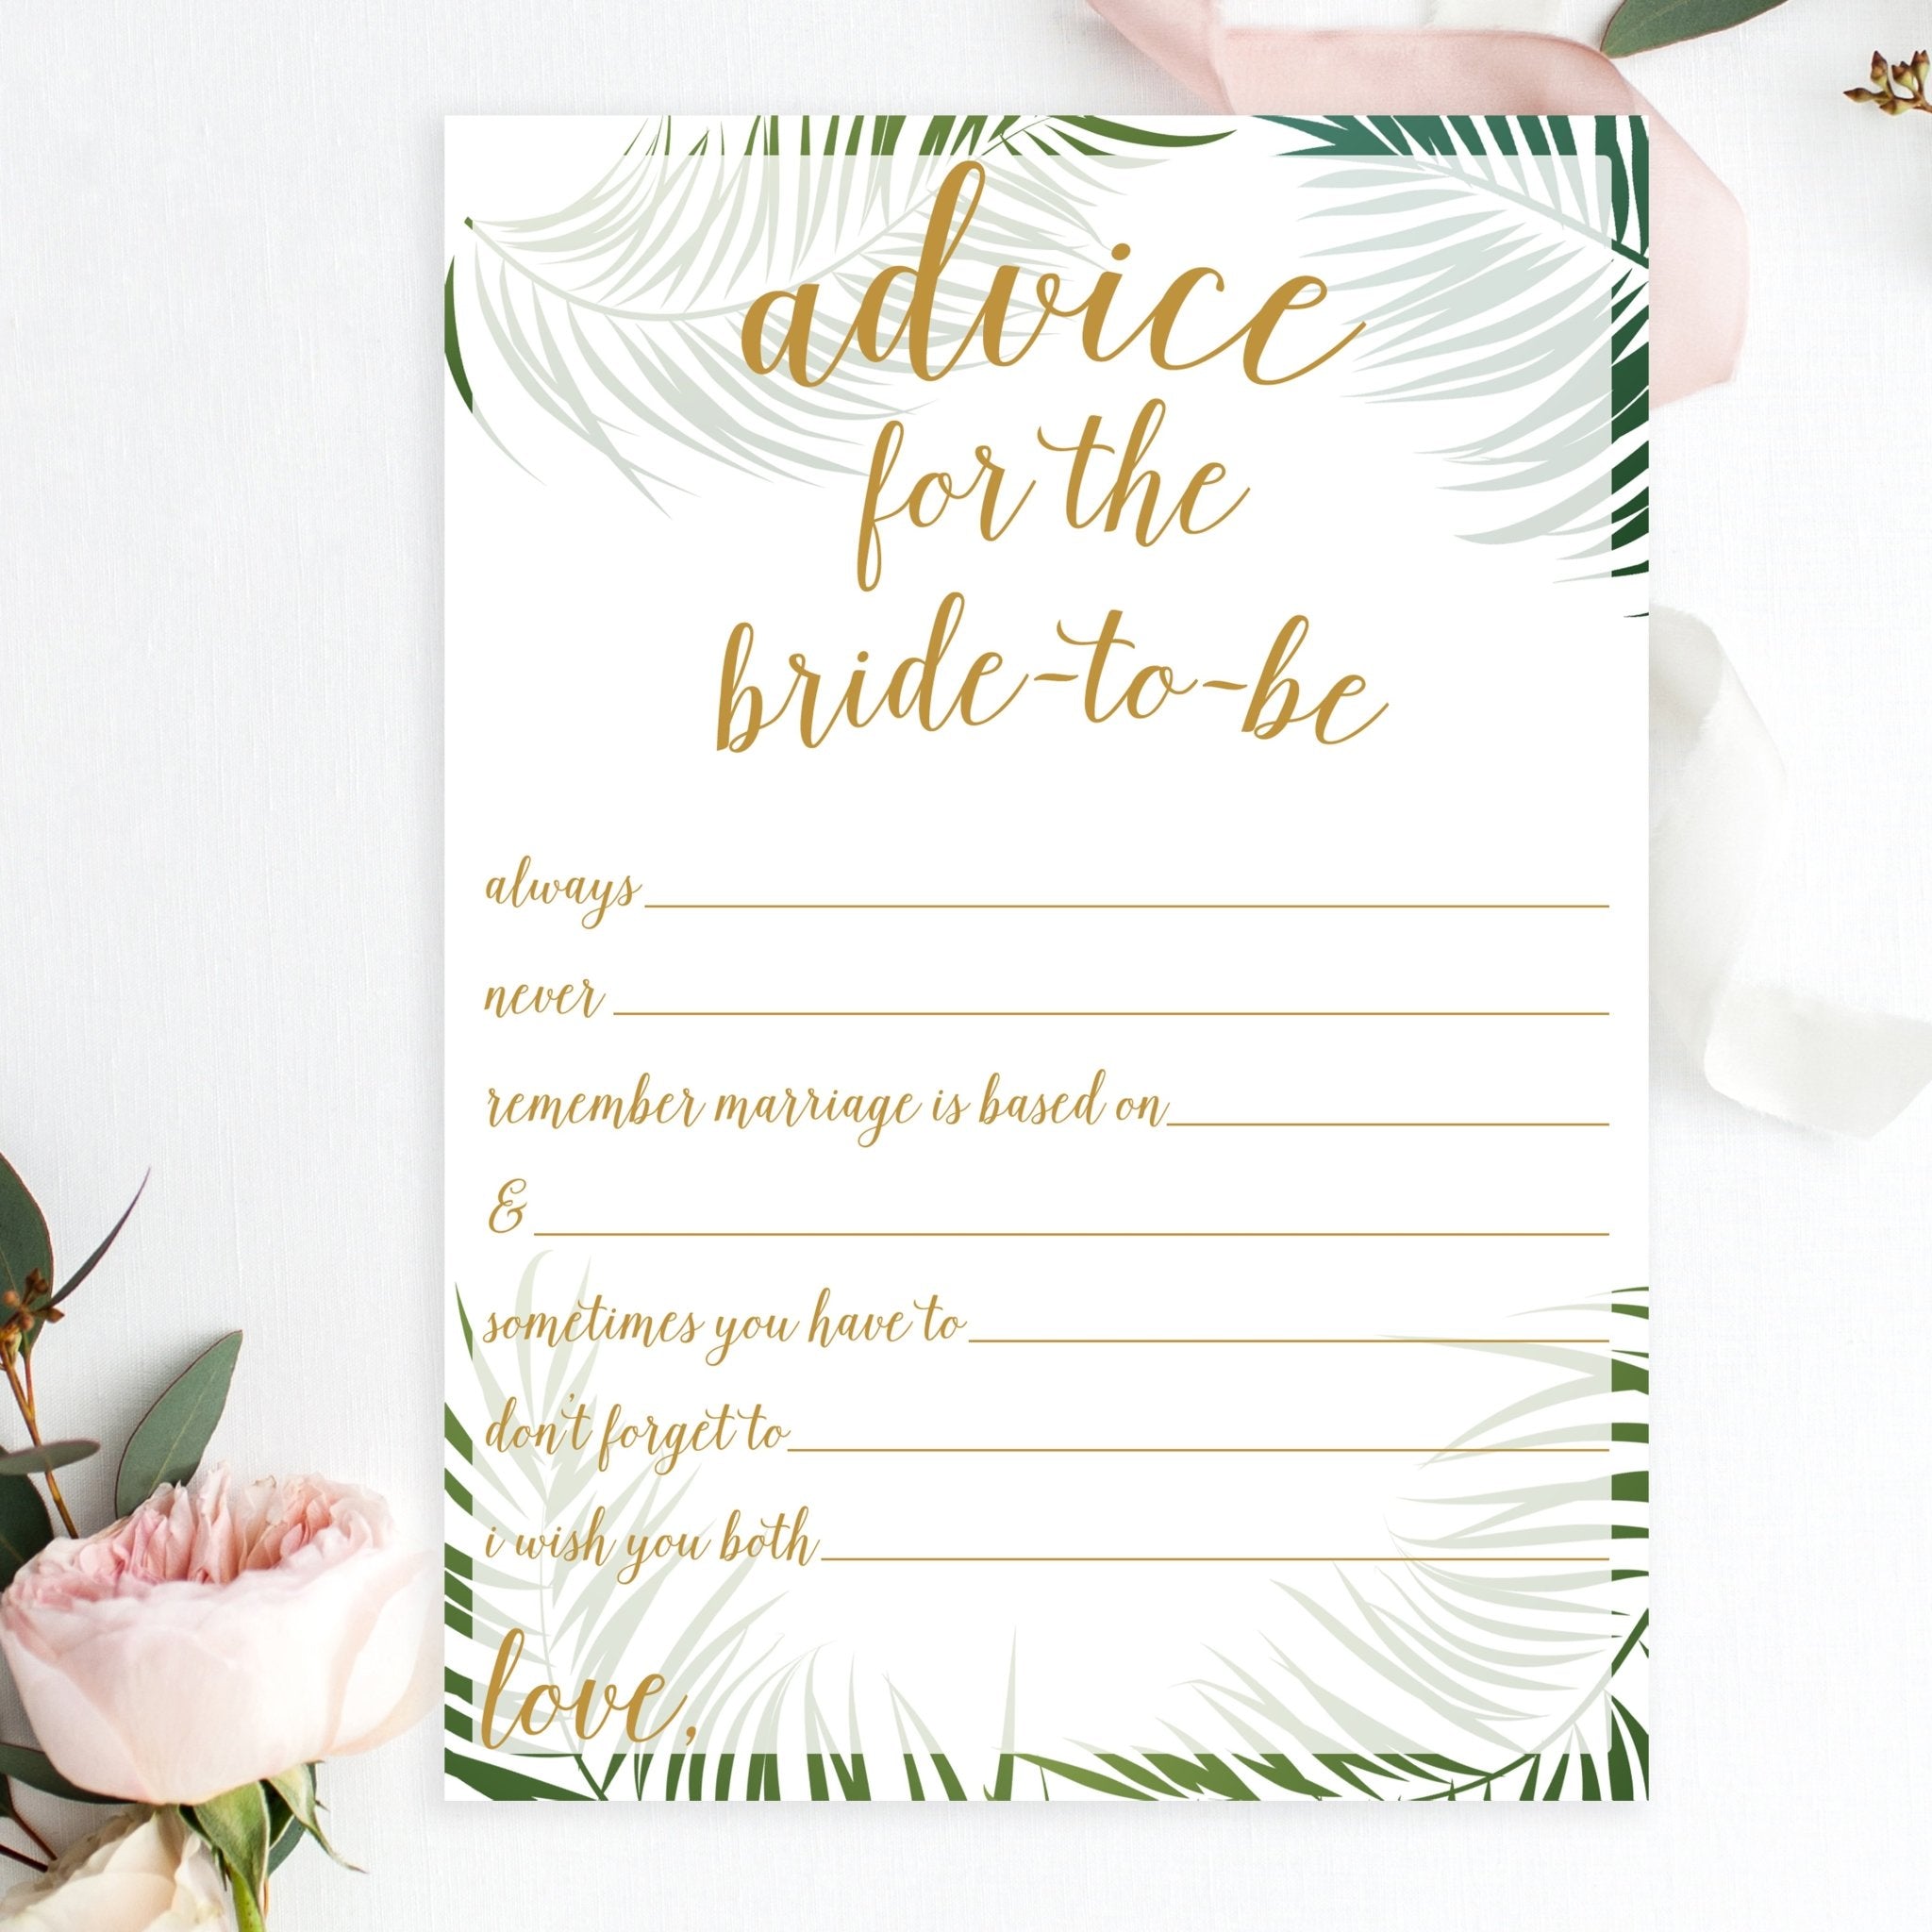 Free Printable Bridal Advice Cards